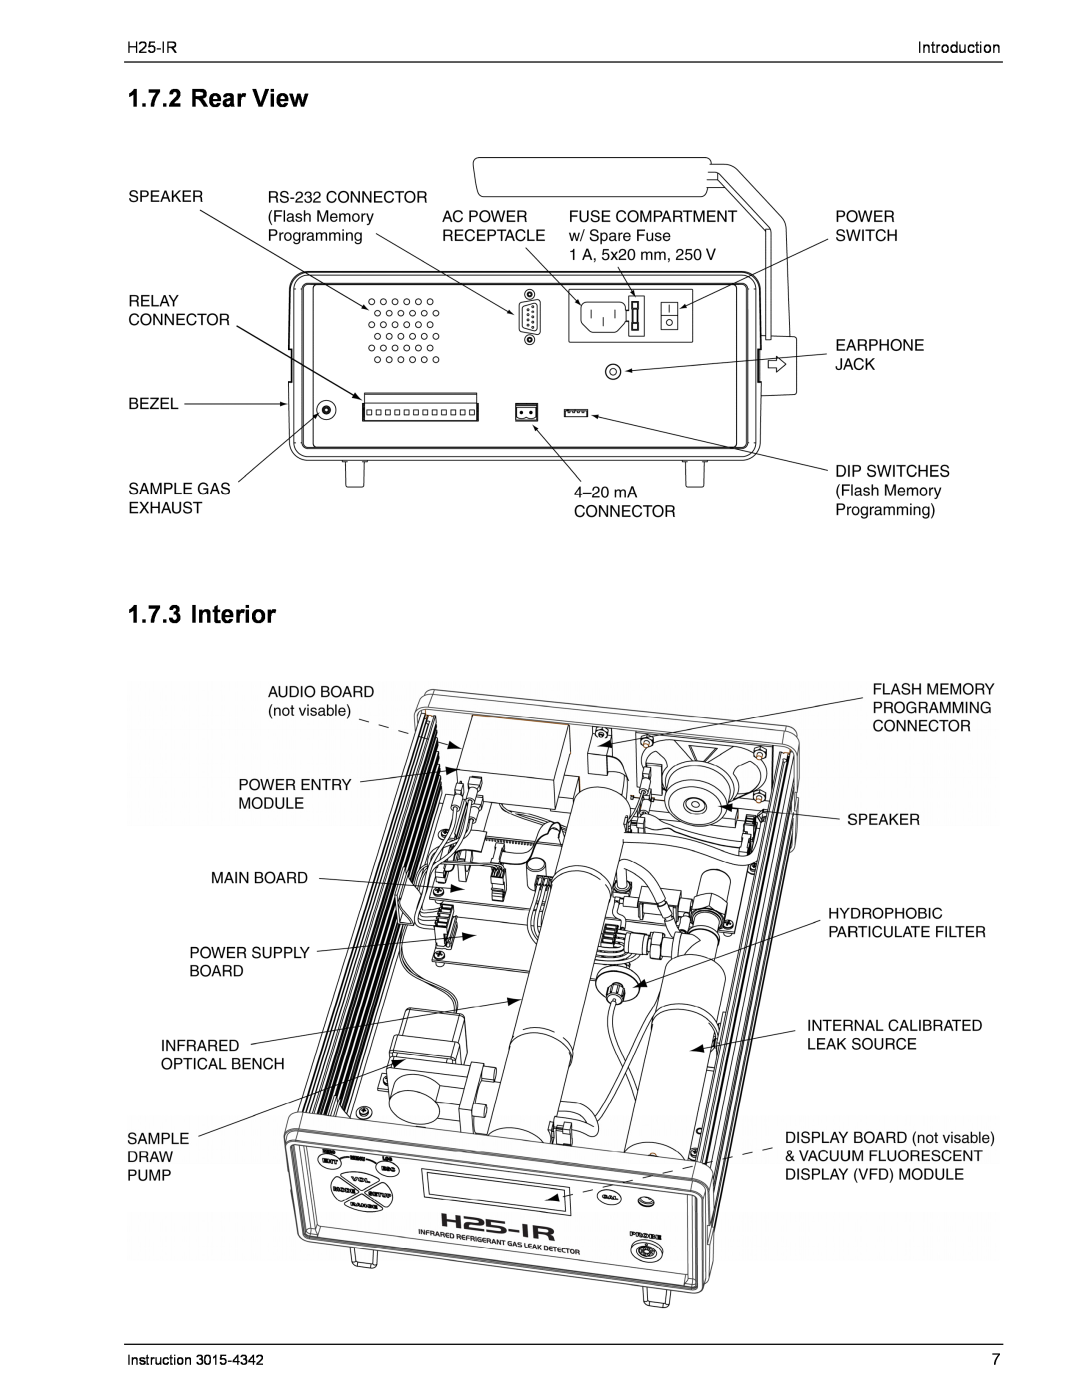 Bacharach H25-IR manual Rear View 1.7.3 Interior, Introduction 